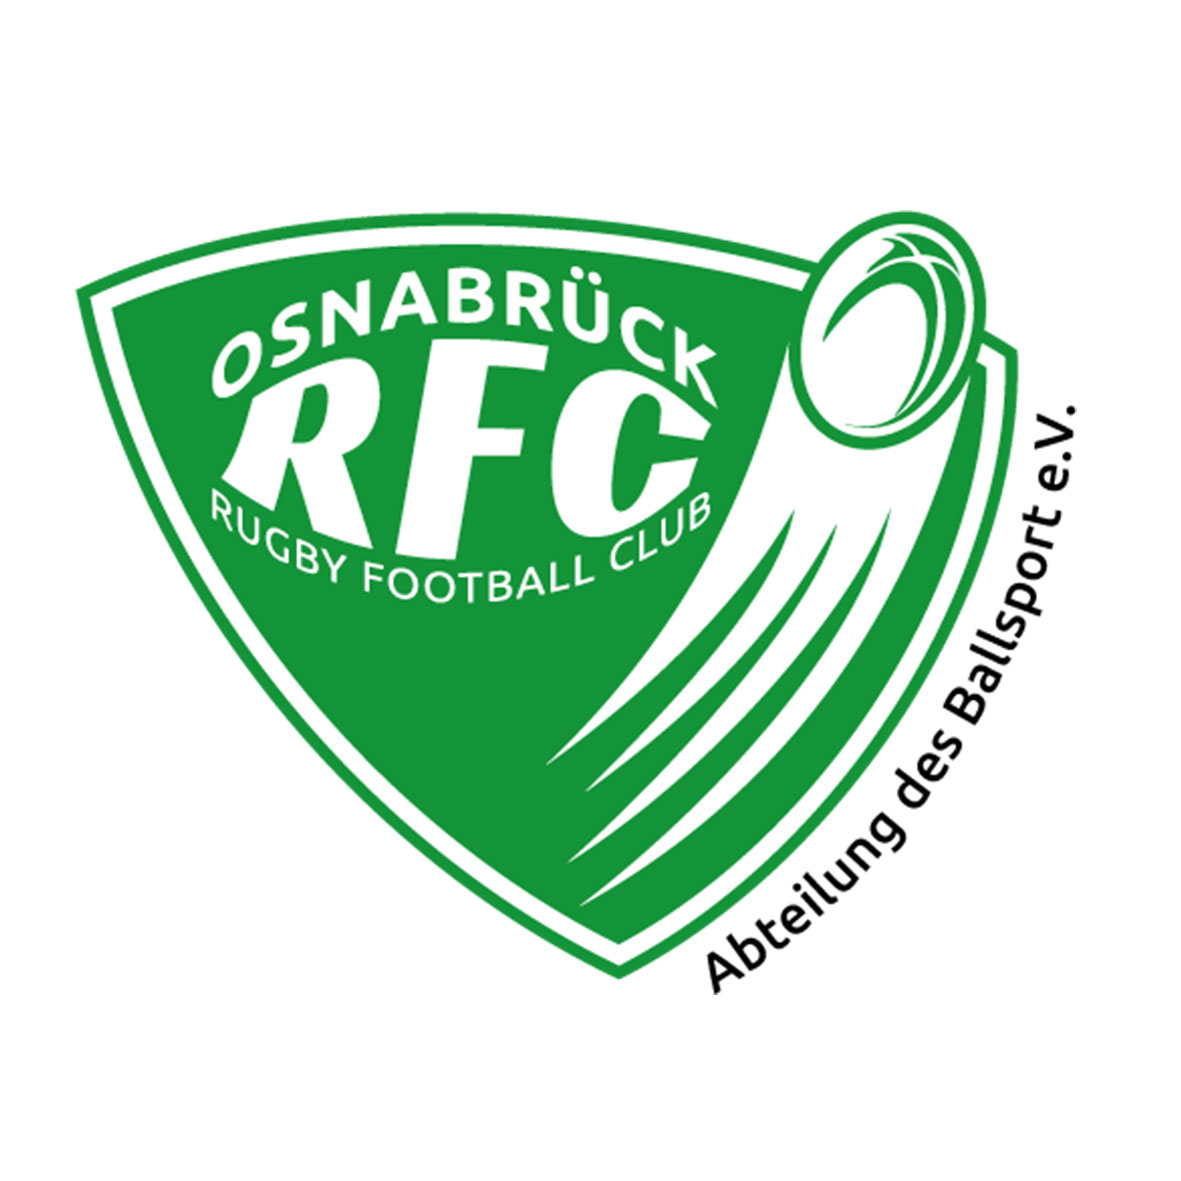 Rugby Football Club Osnabrück